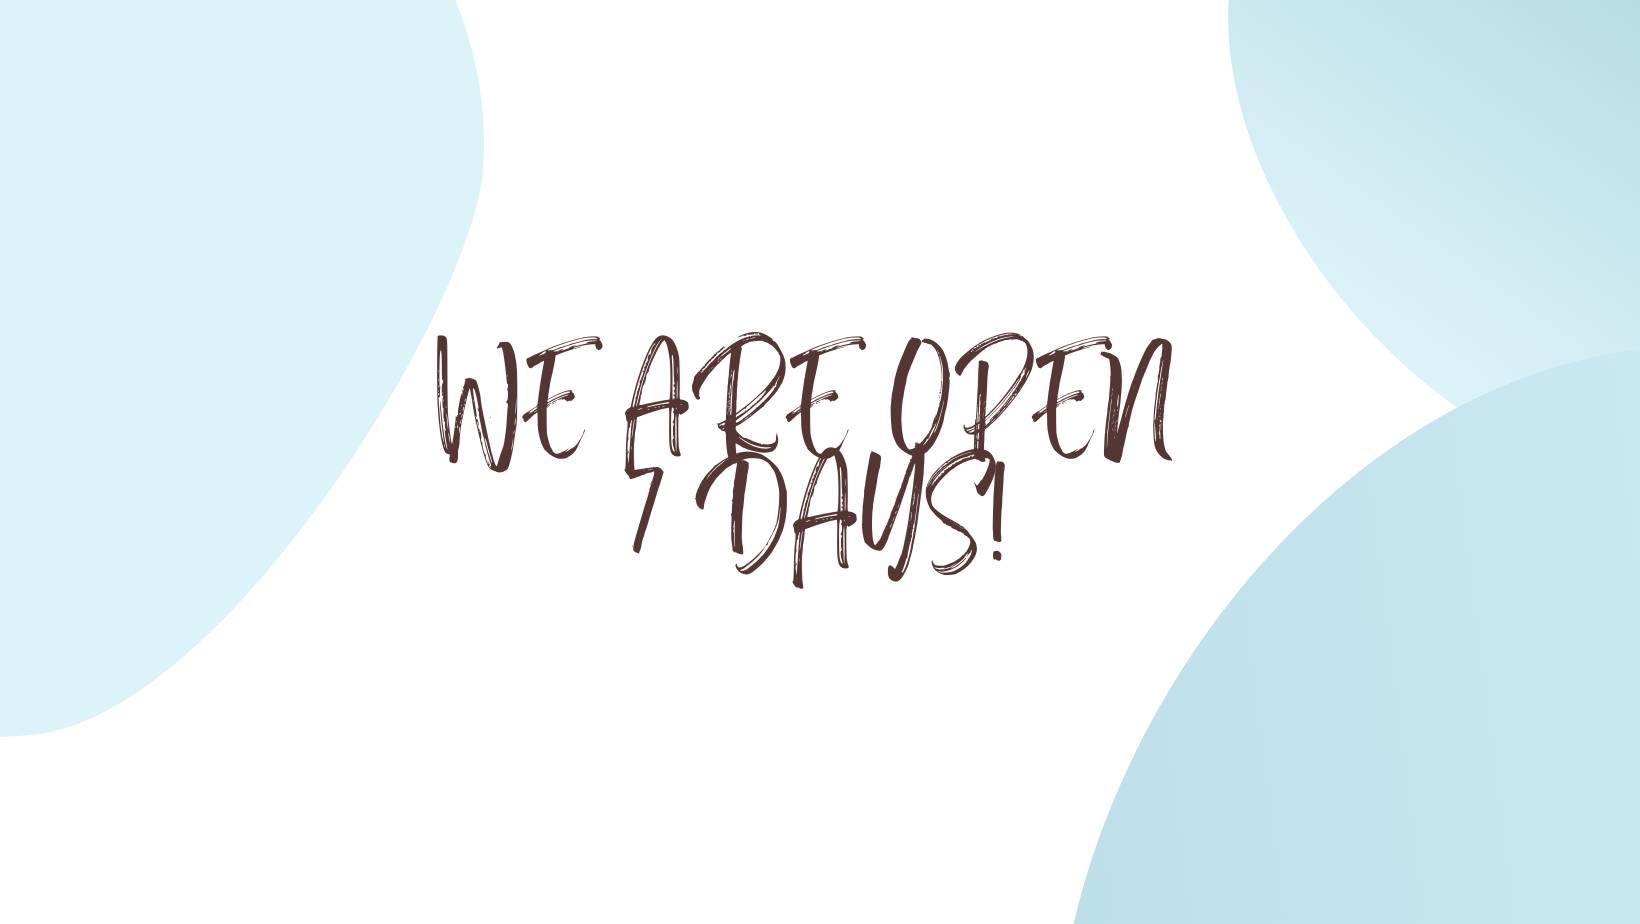 Open 7 Days